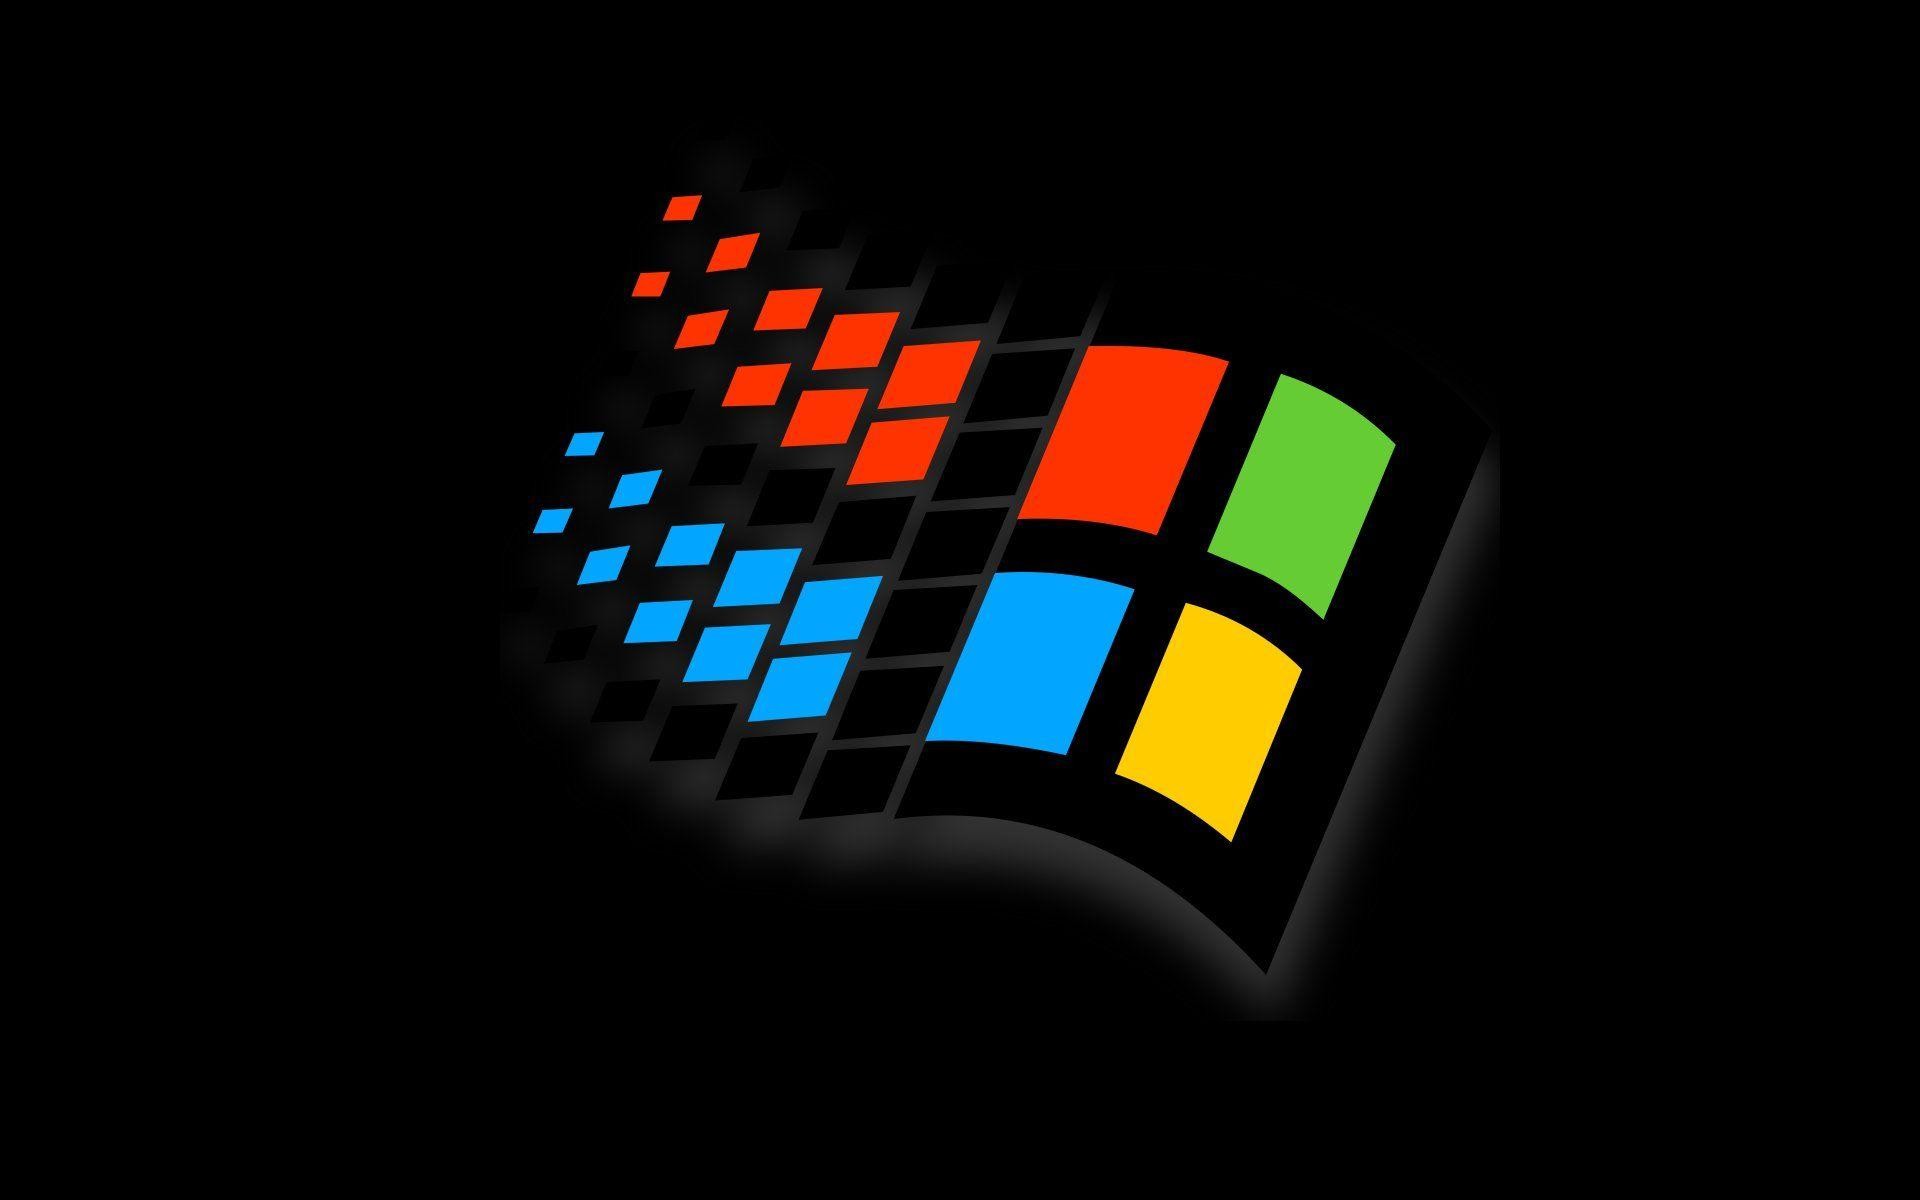 Original Windows 95